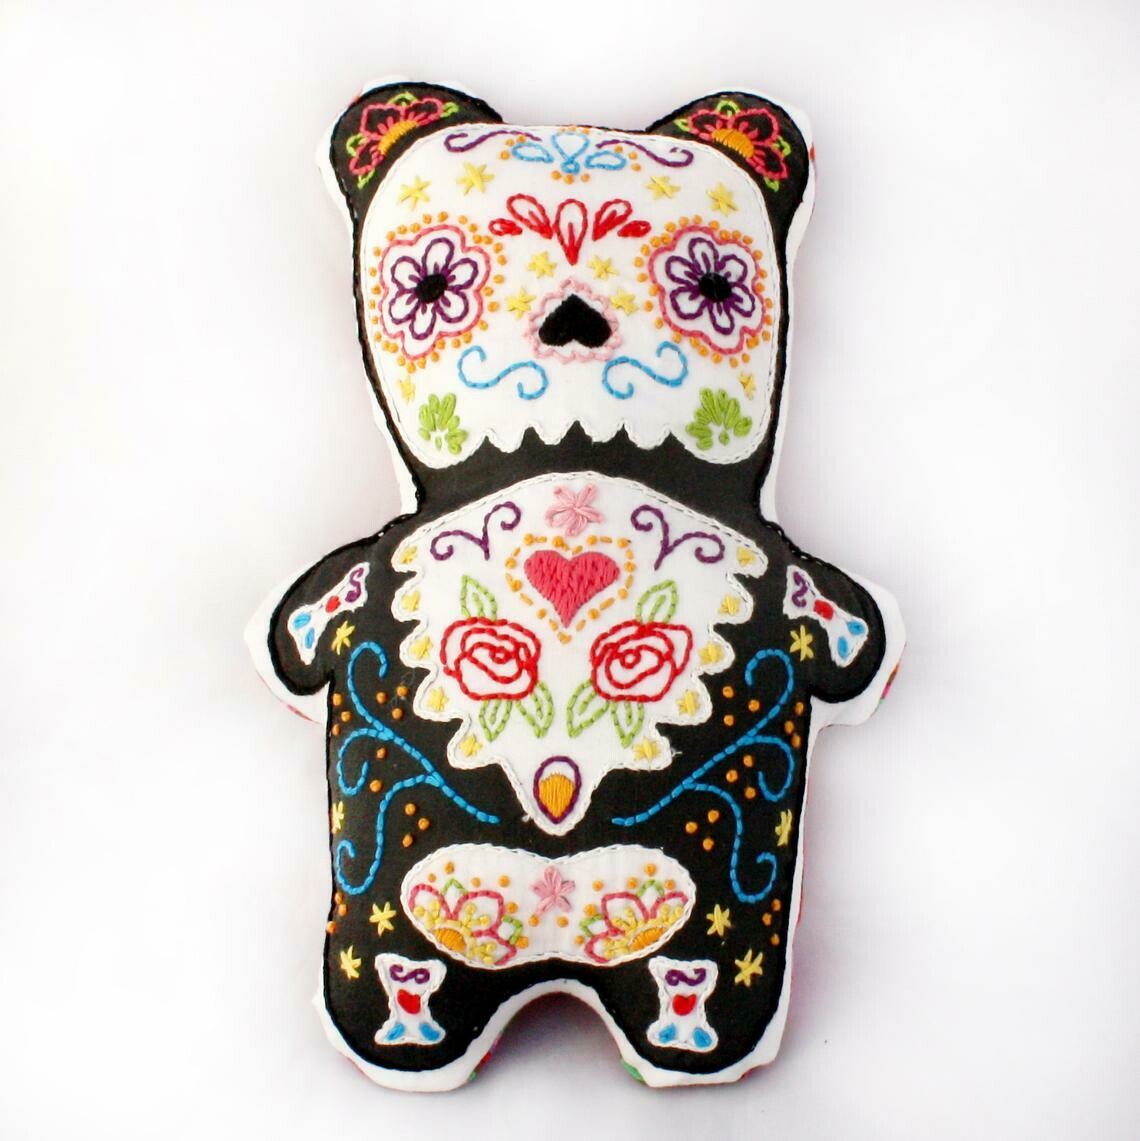 SALE - Crafty Creatures Embroidery Kit - Sugar Skull Bear